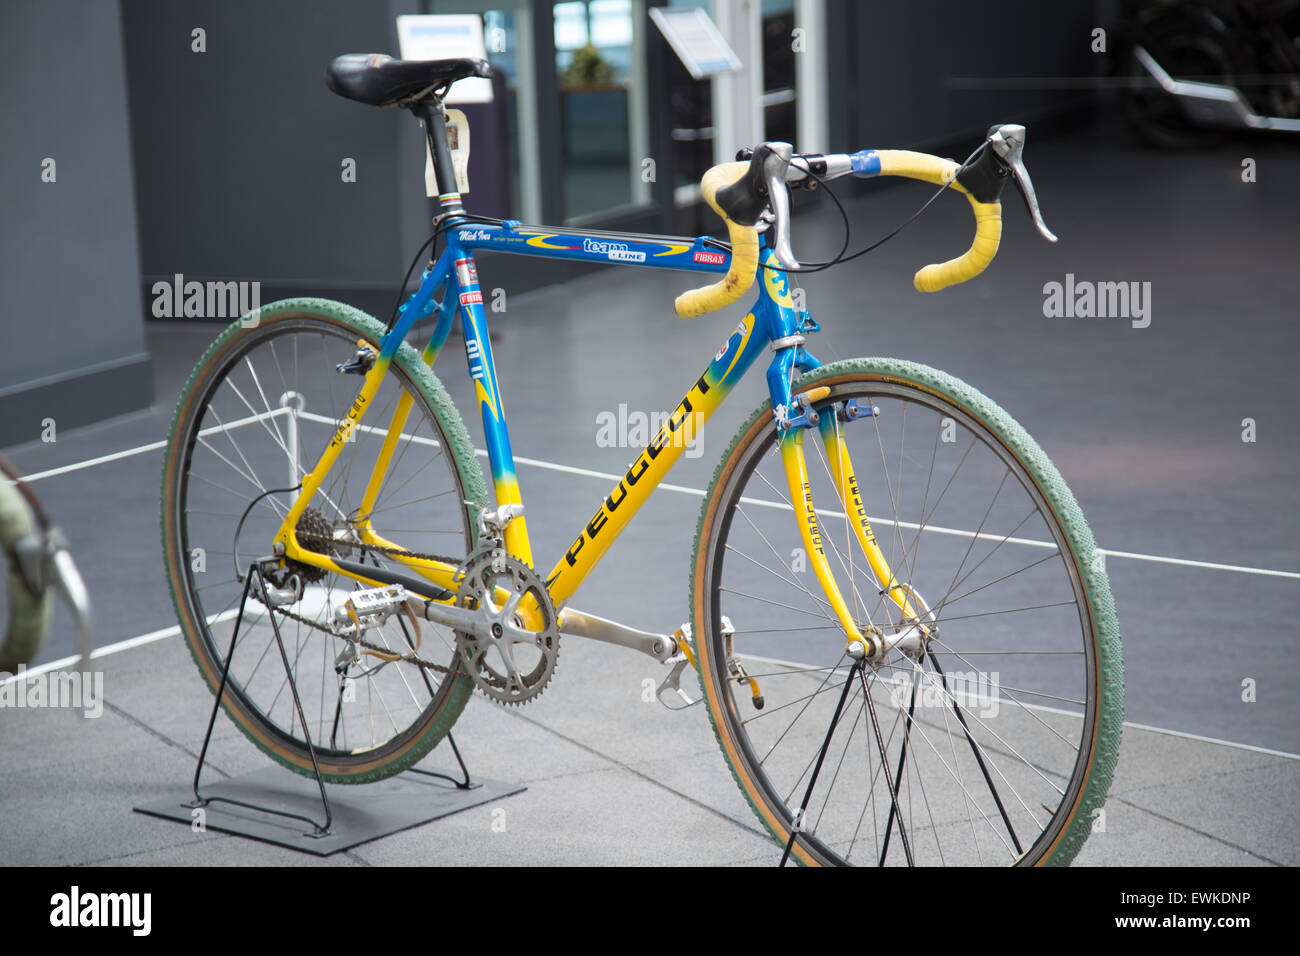 Bicicleta de carreras fotografías e imágenes de alta resolución - Alamy